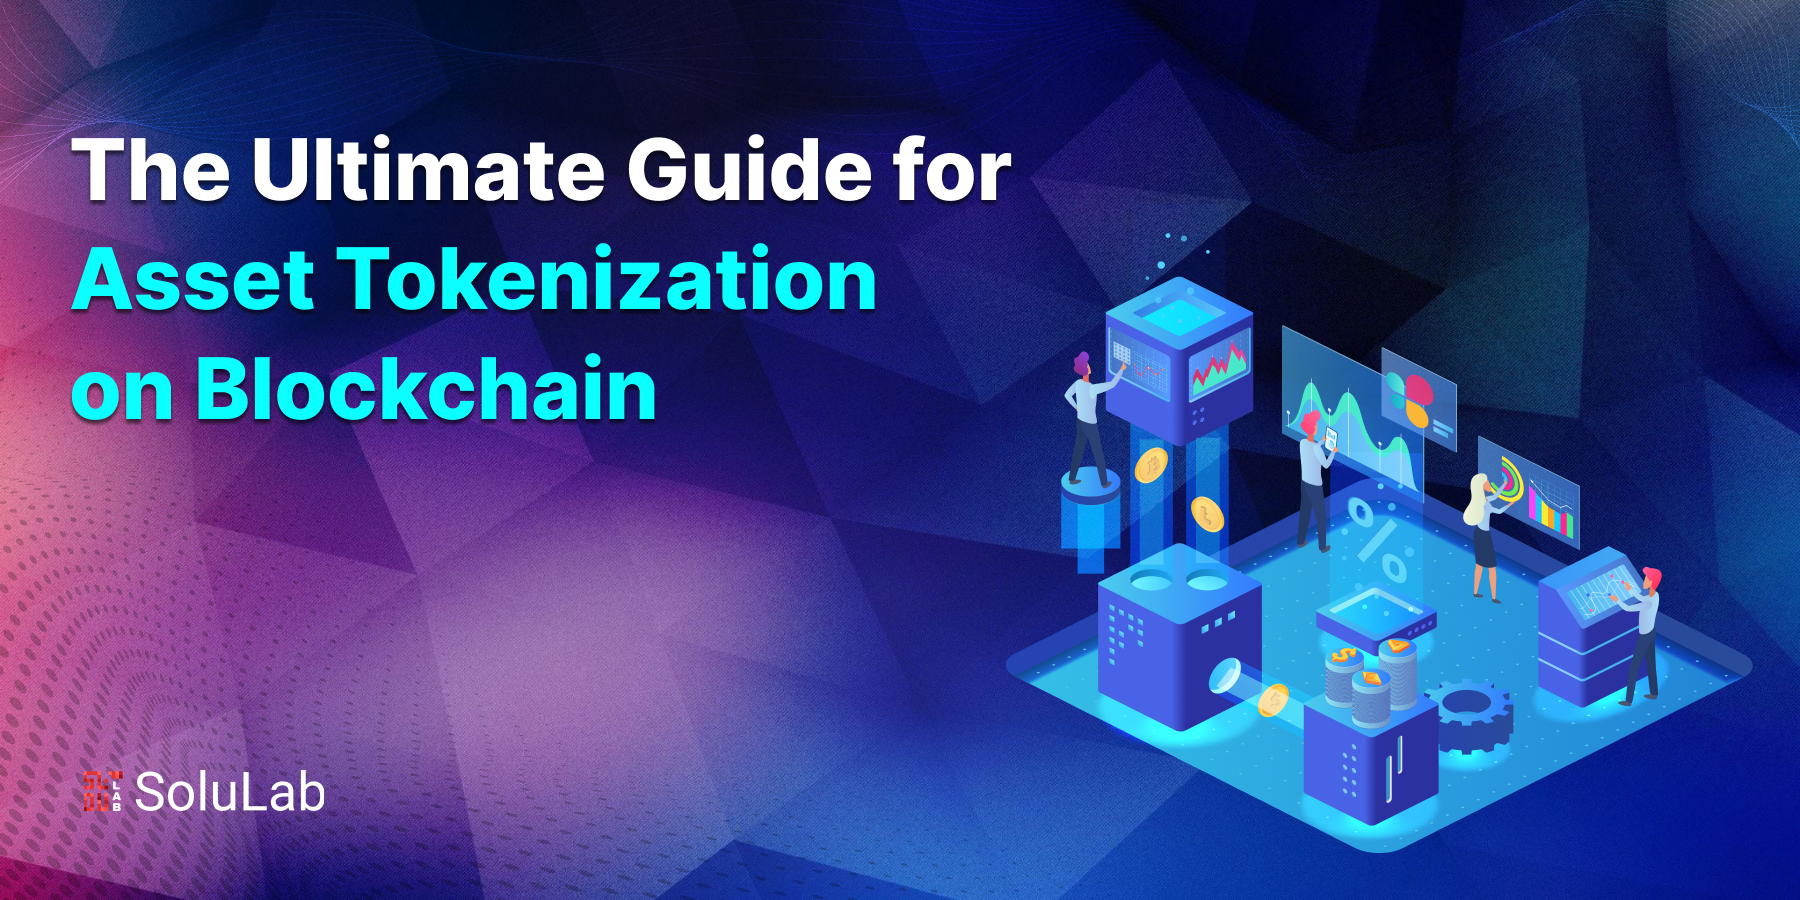 The Ultimate Guide for Asset Tokenization on Blockchain